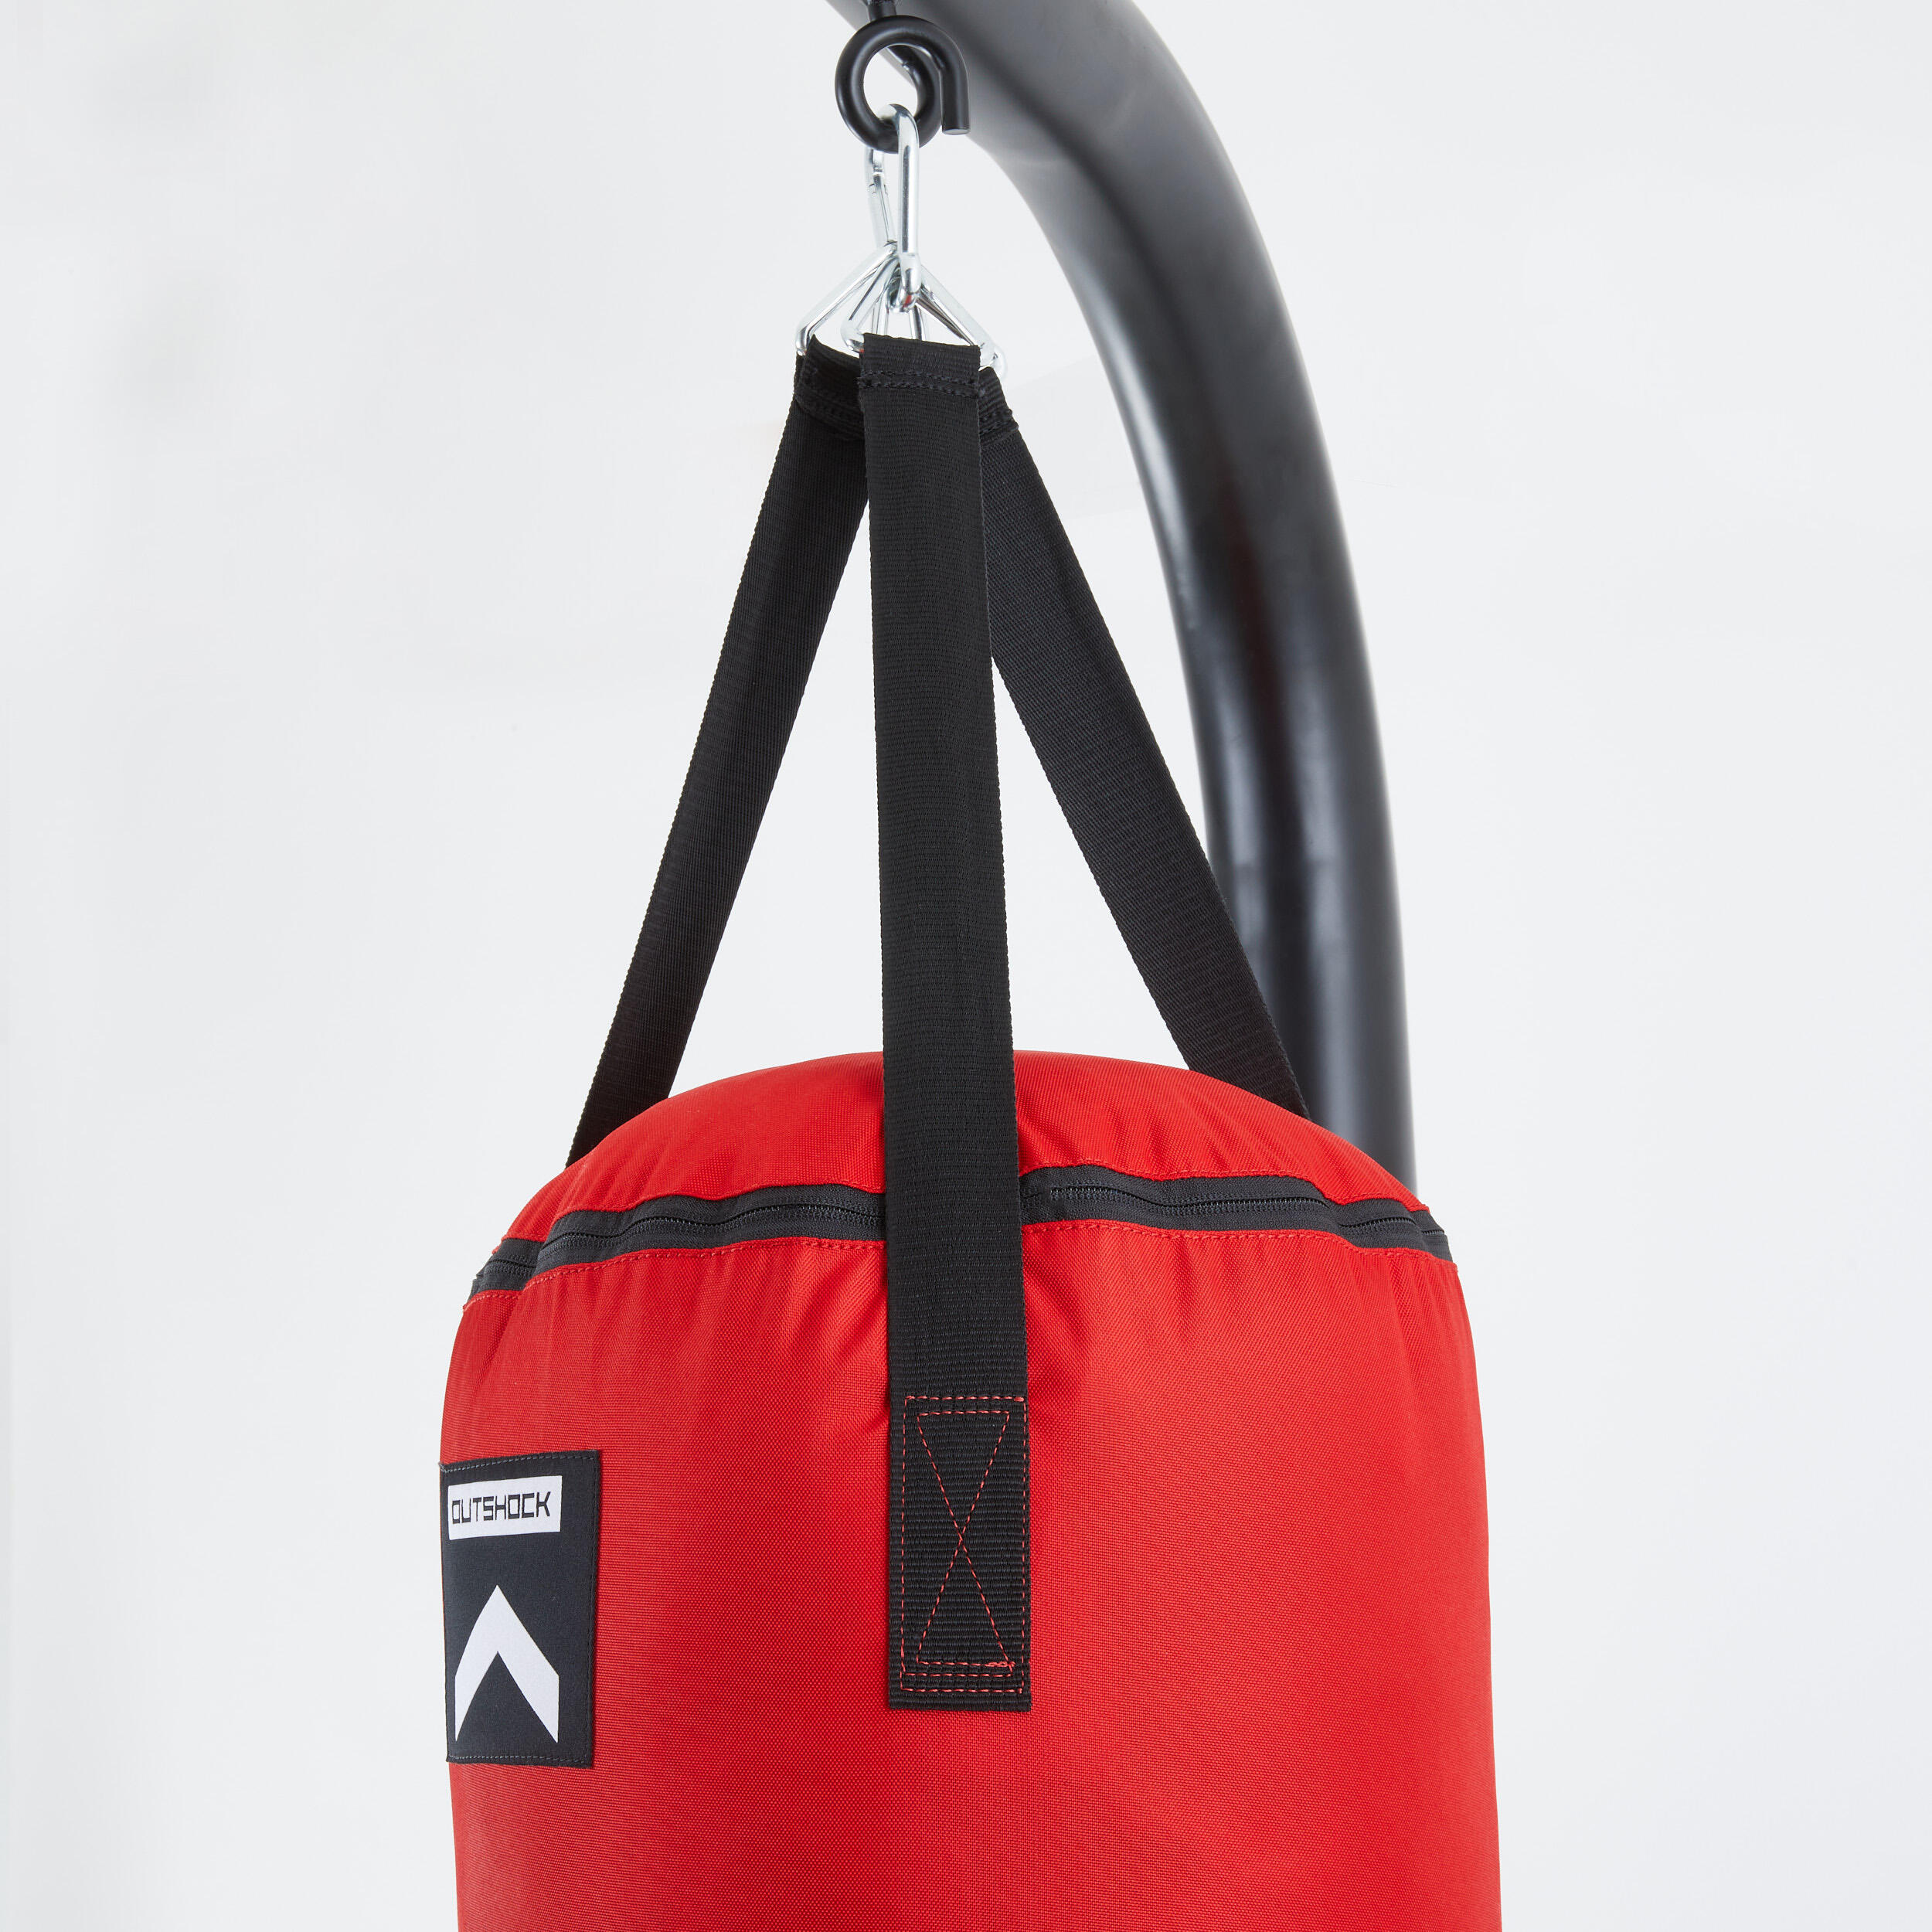 Adult Boxing Punching Bag  Sports Equipment  1737999071